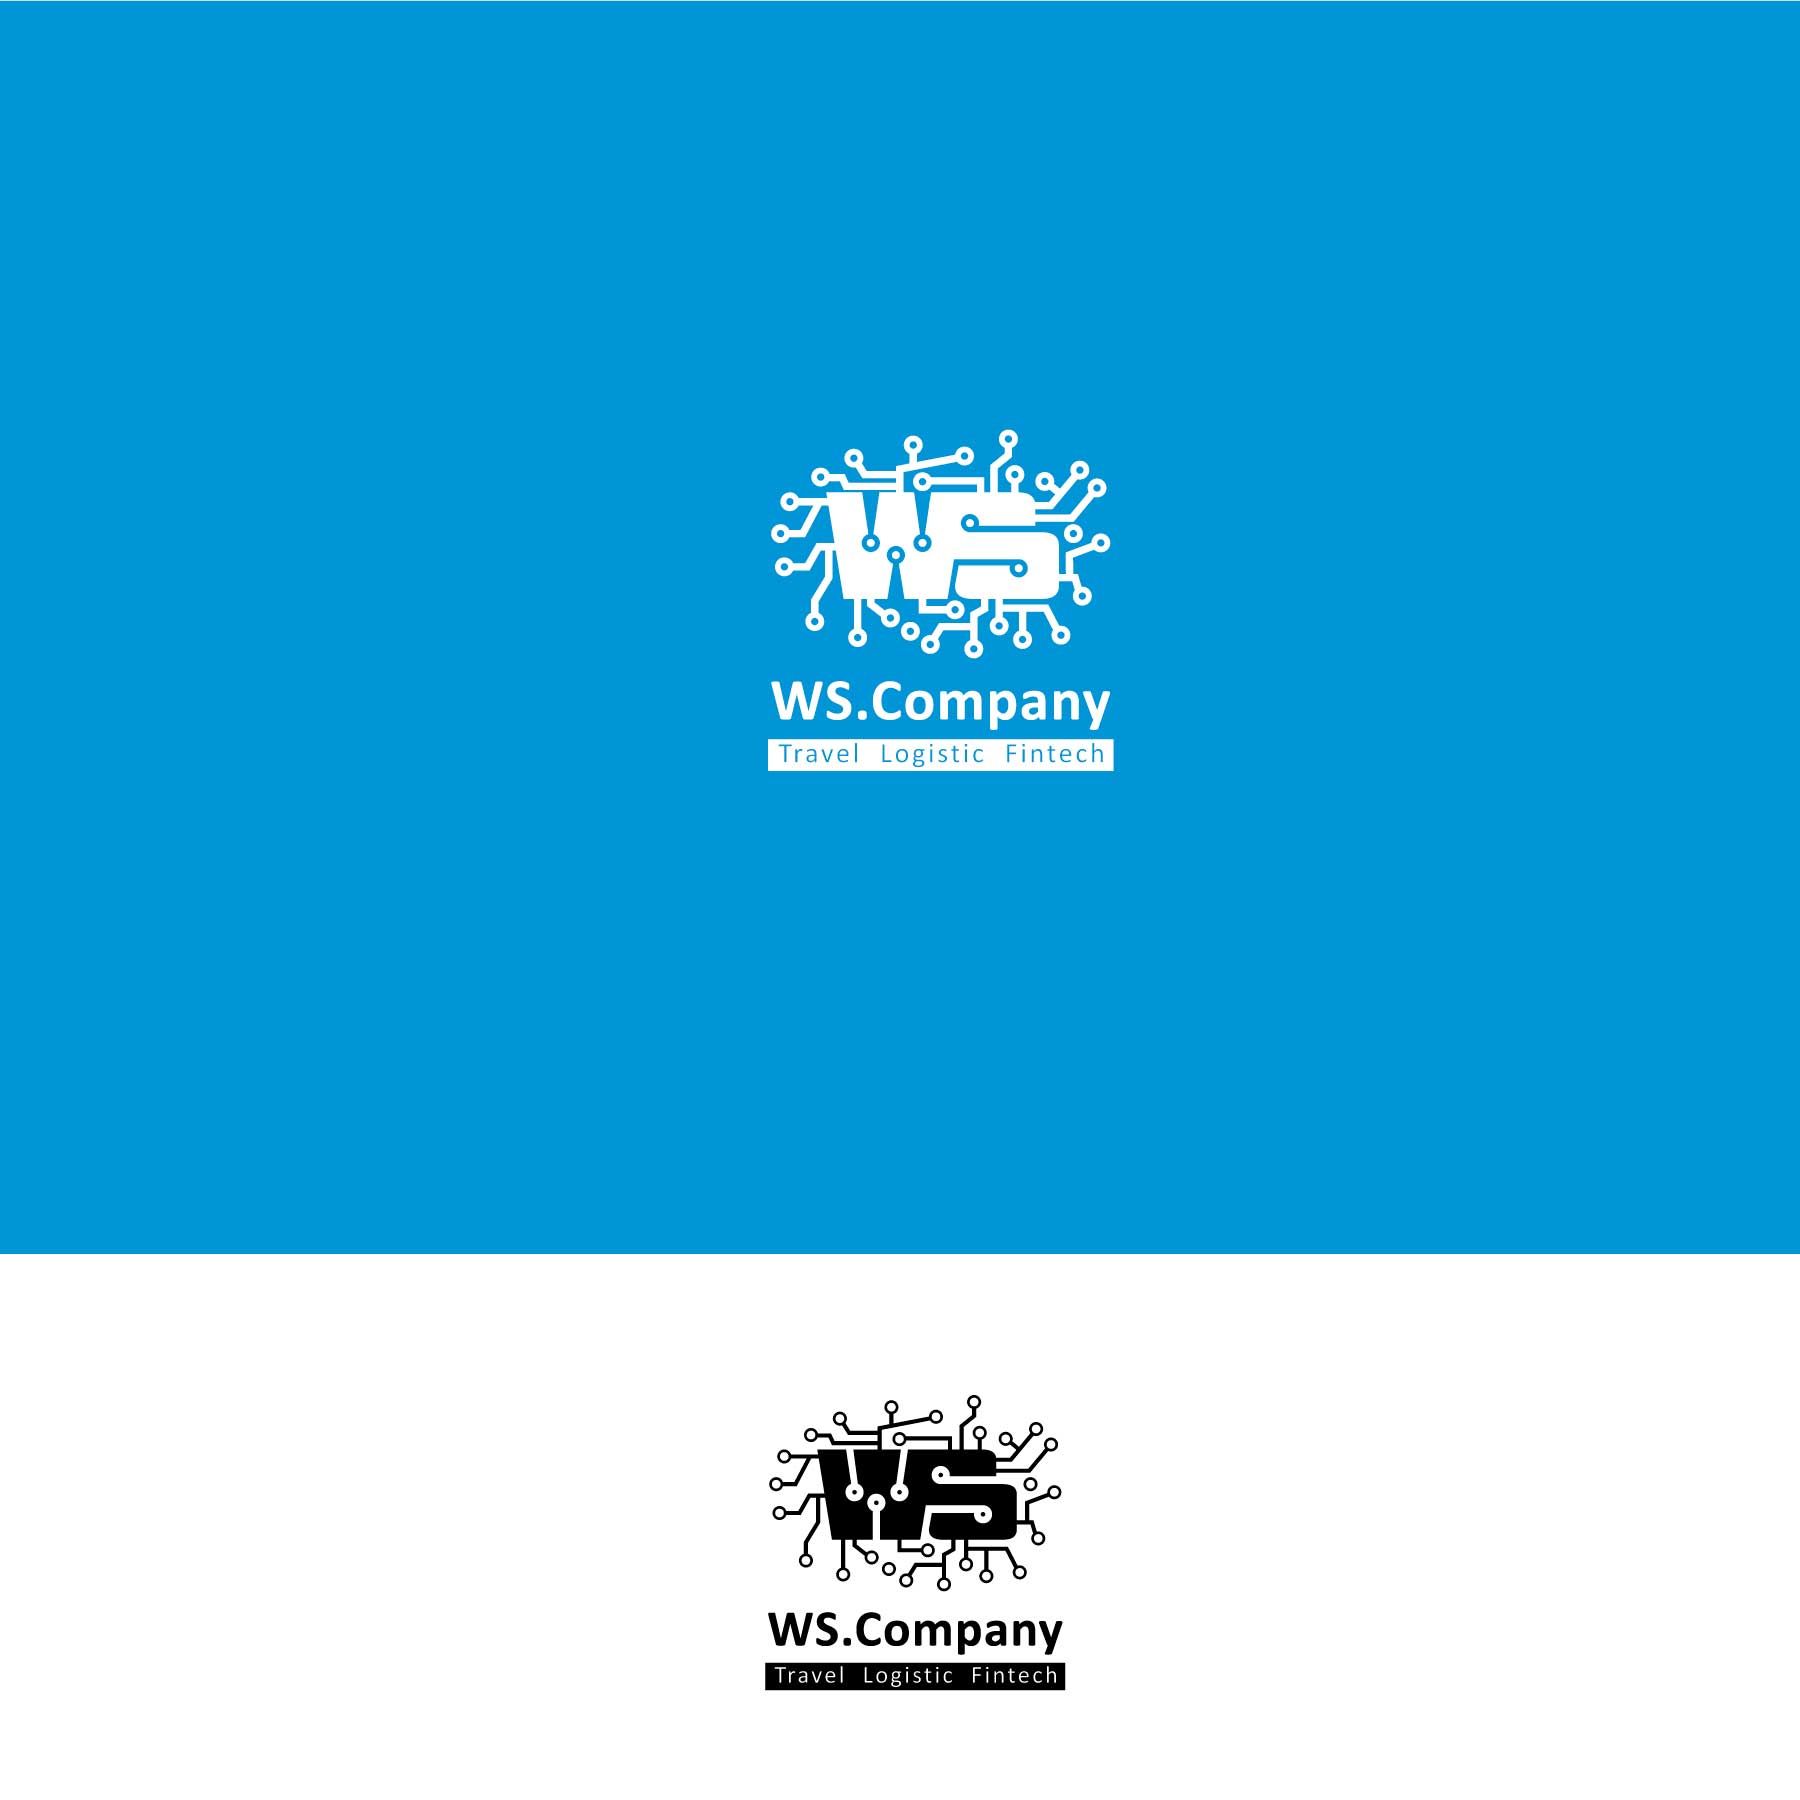 Логотип для WS.Company — Travel - Logistic - Fintech - дизайнер GVV